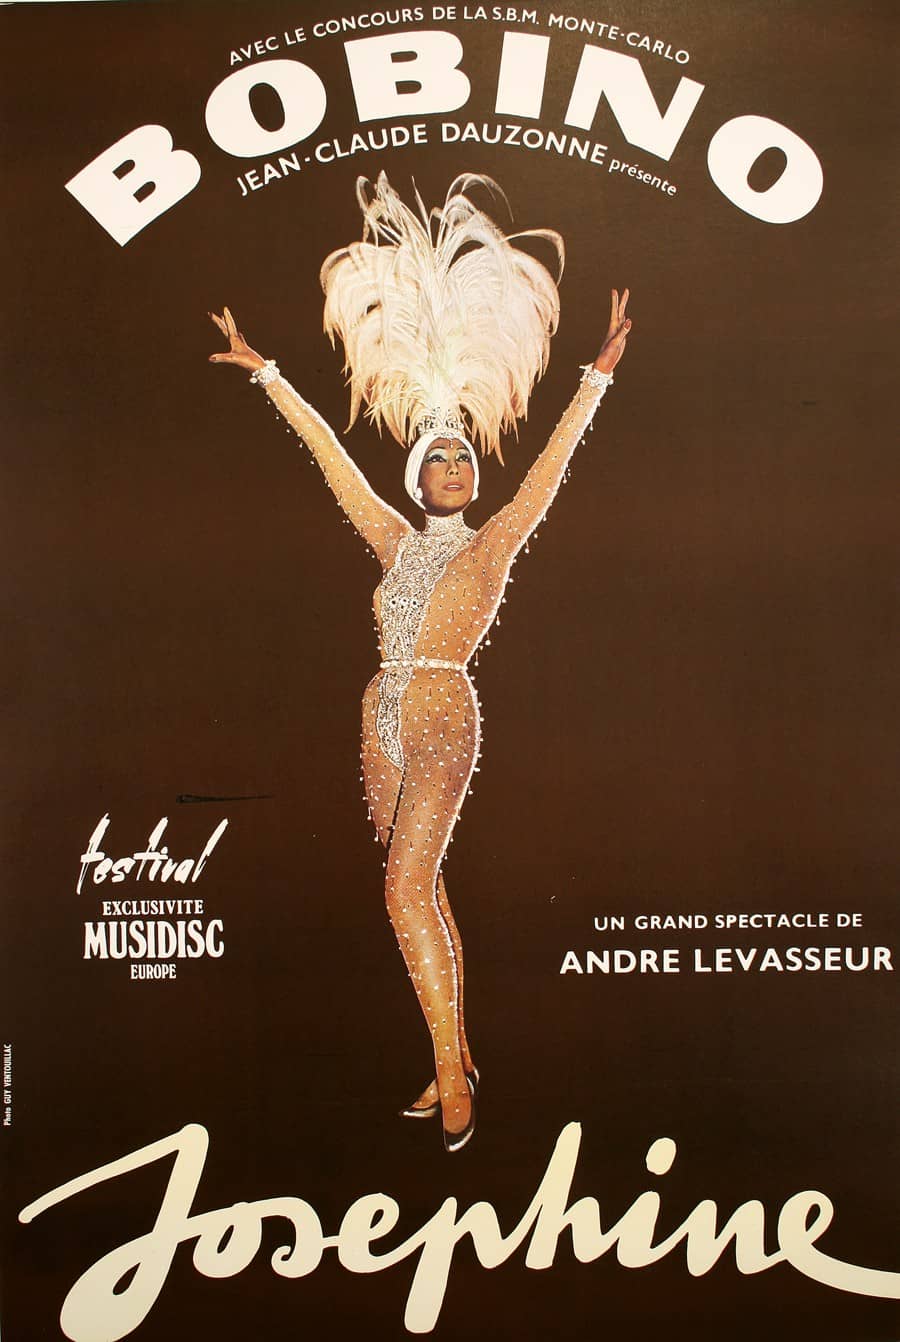 Original French Poster of Josephine Baker Circa 1970